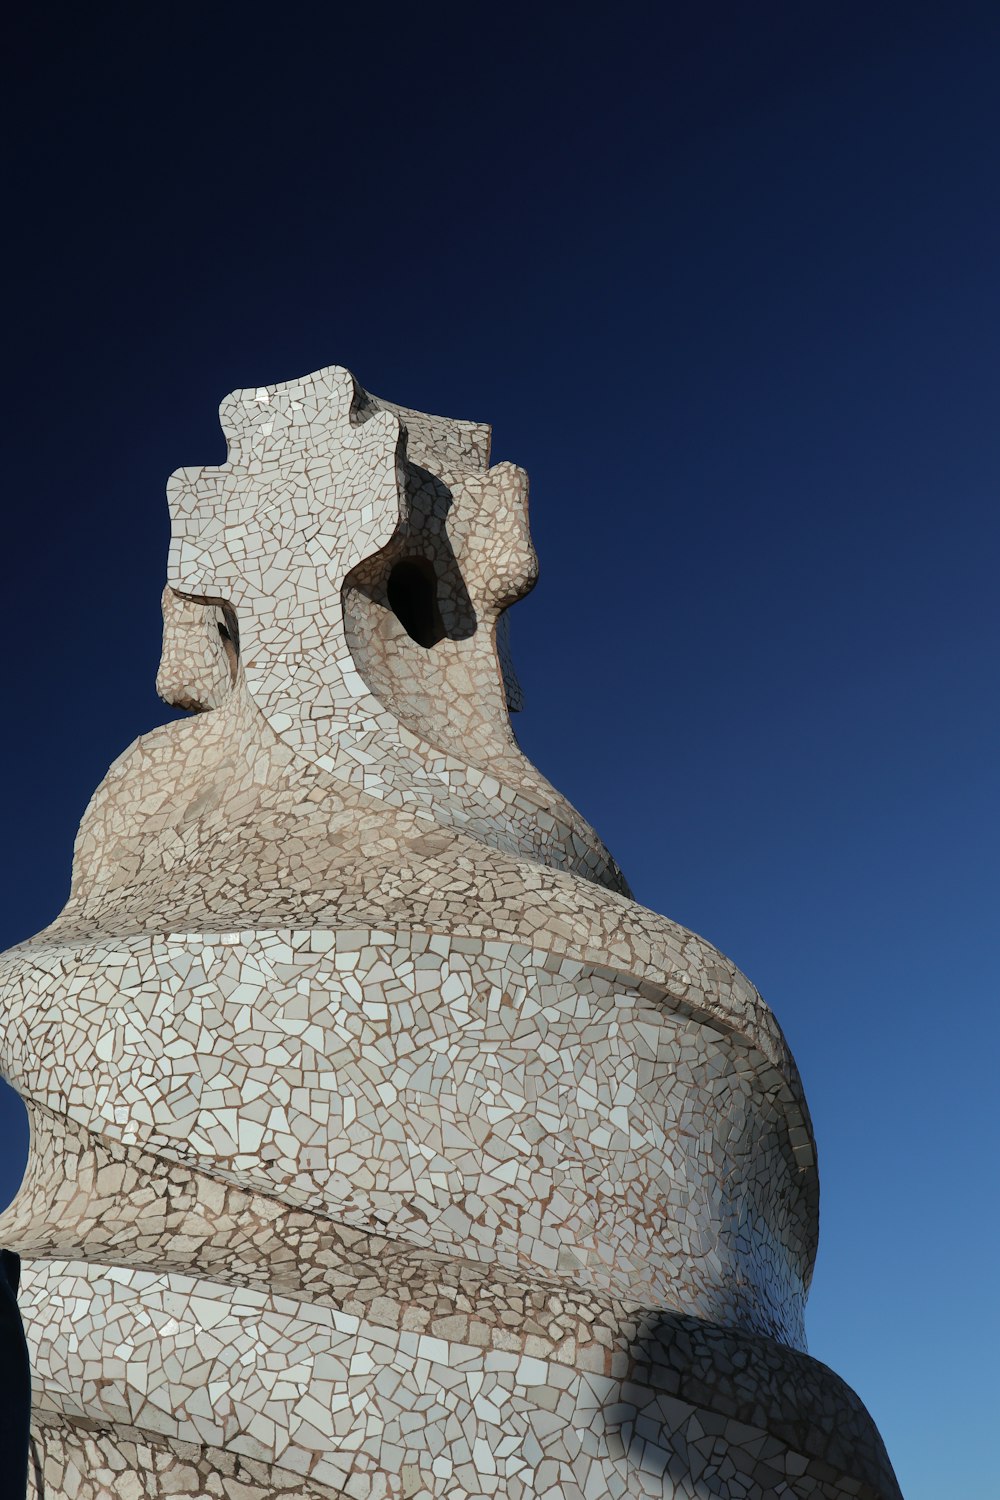 a stone sculpture of a head